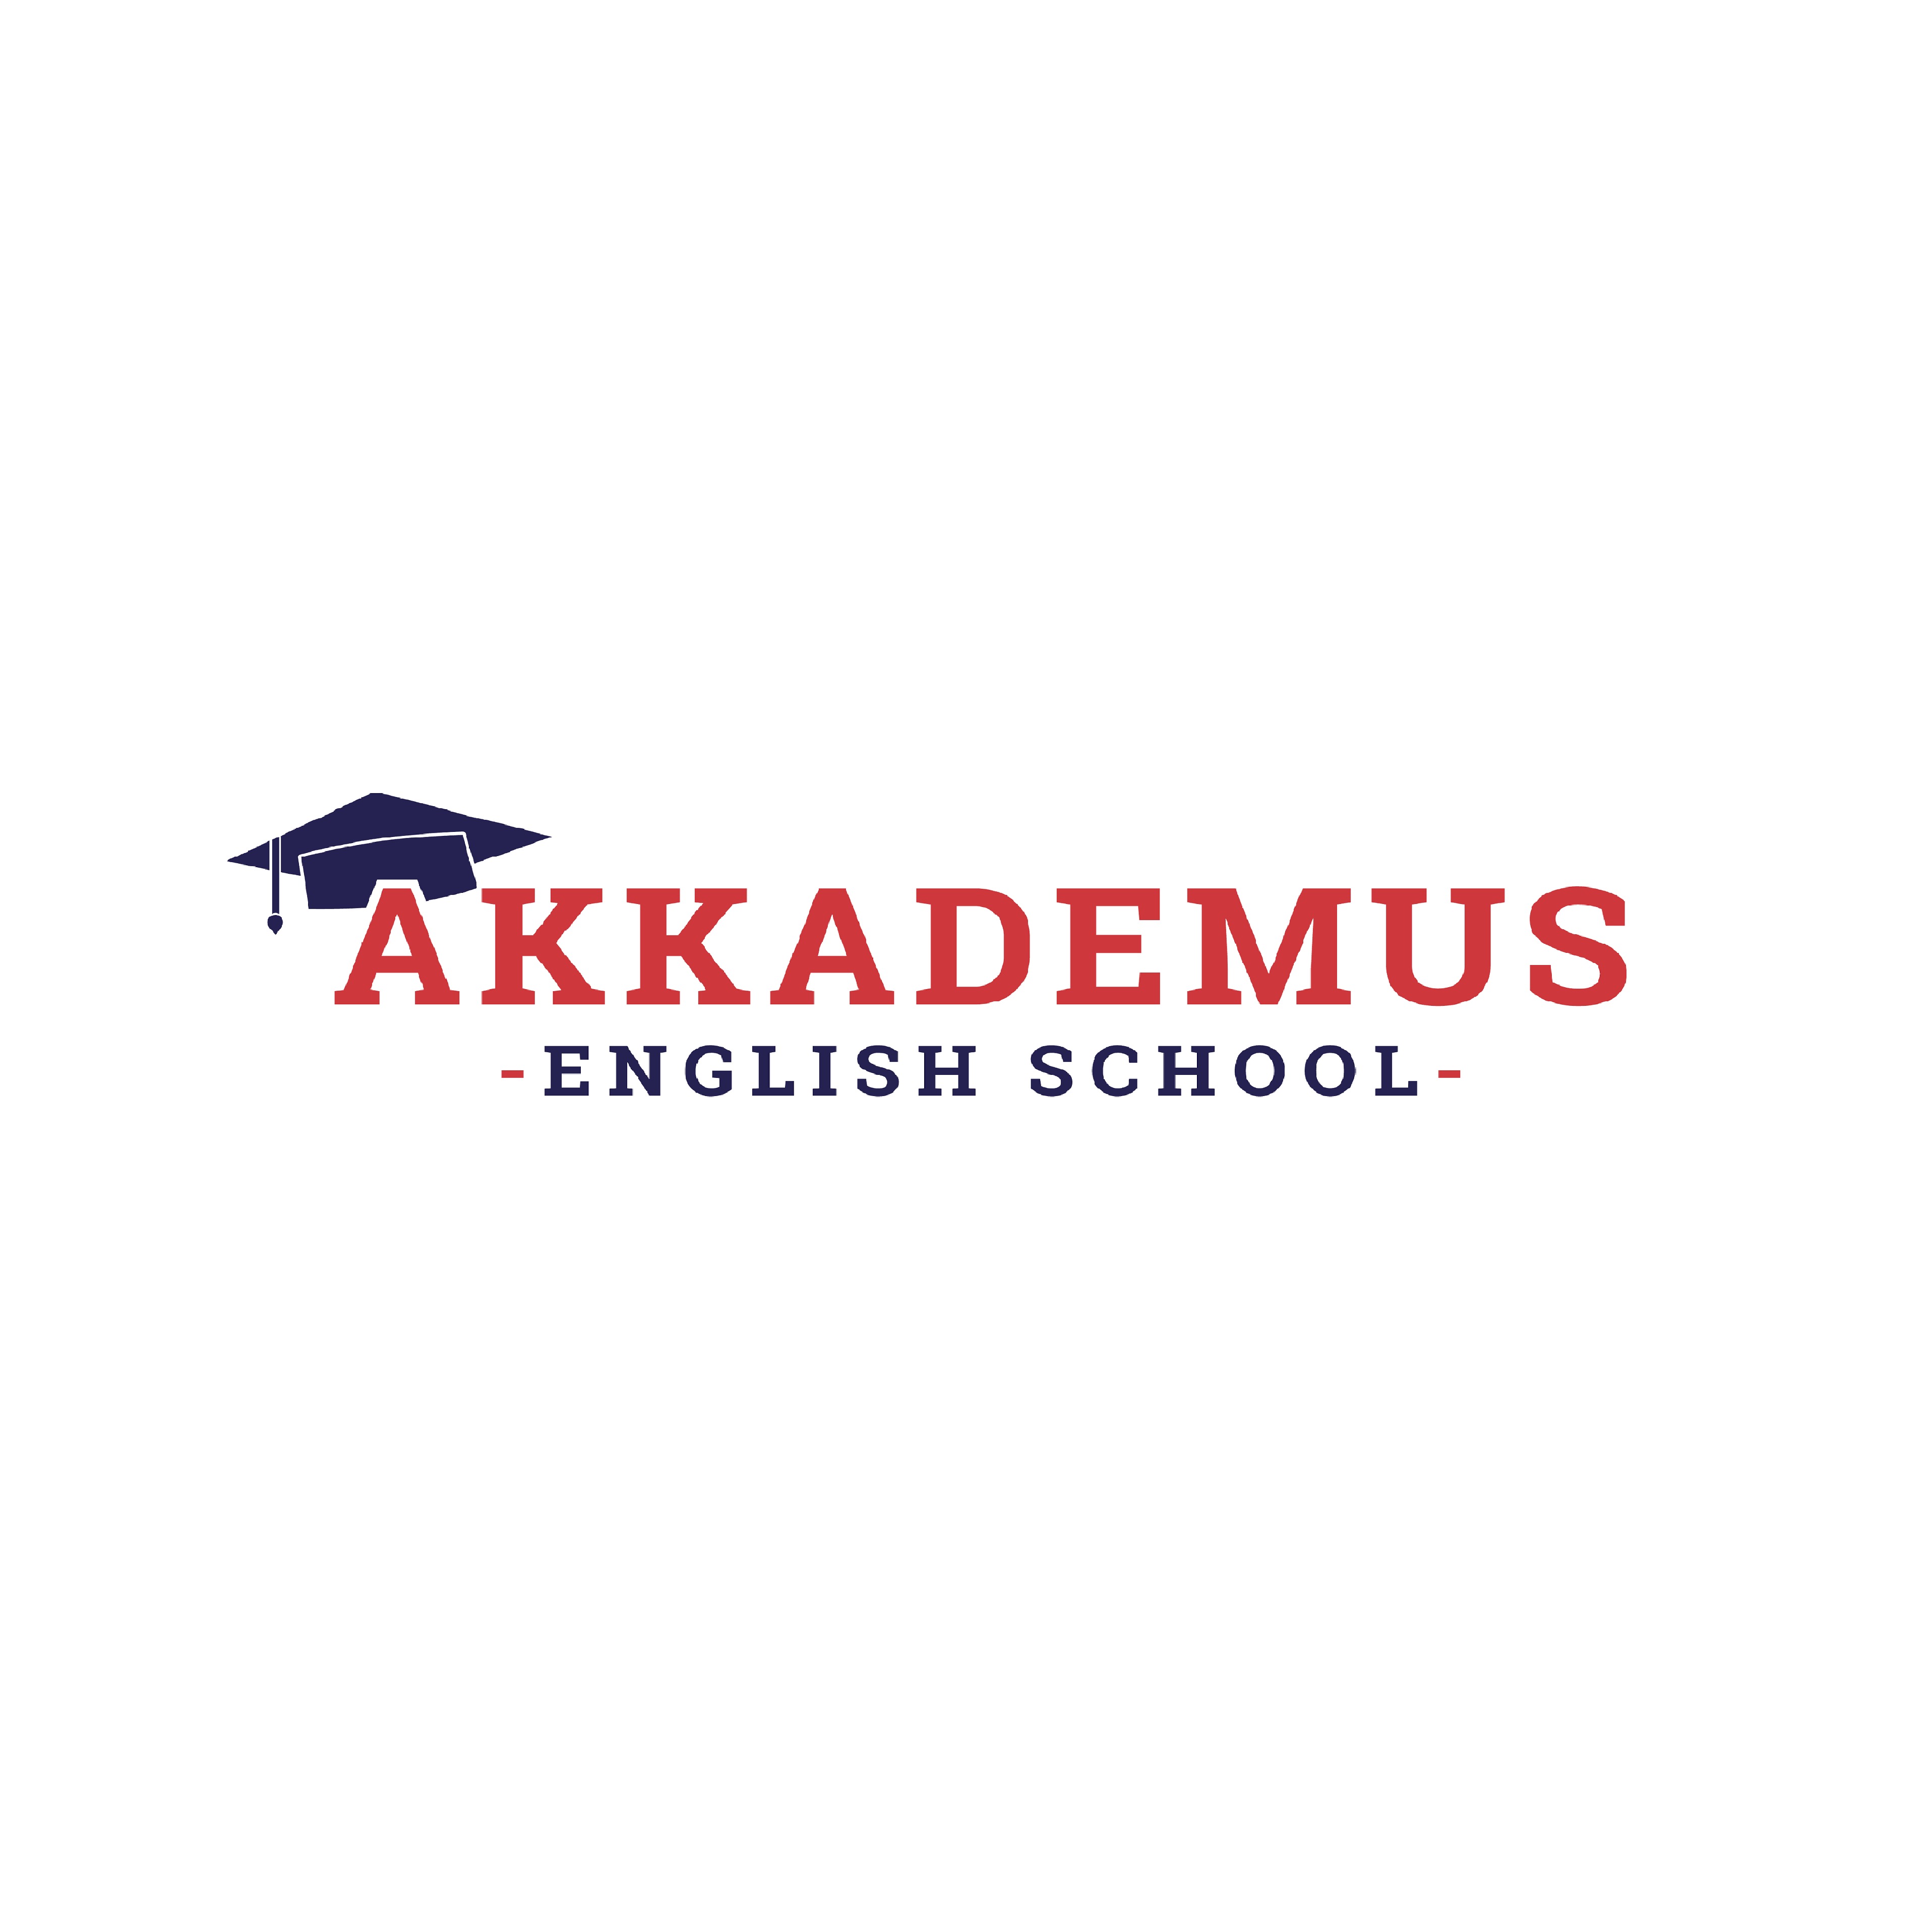 Akkademus English School